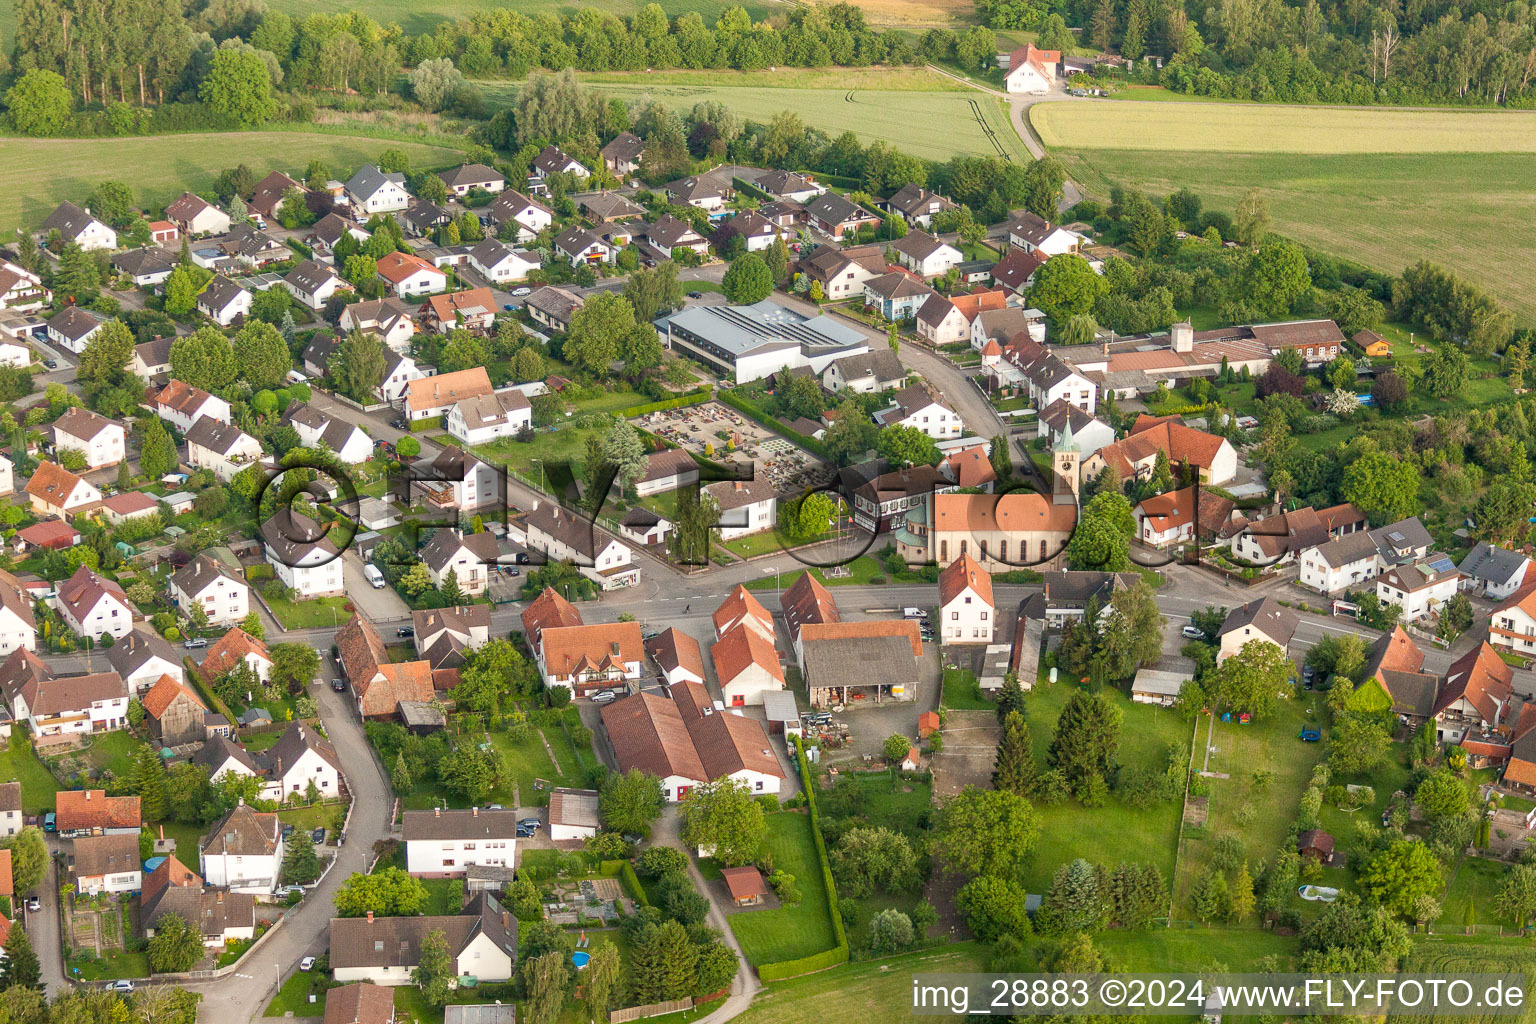 Village view in the district Honau in Rheinau in the state Baden-Wurttemberg, Germany